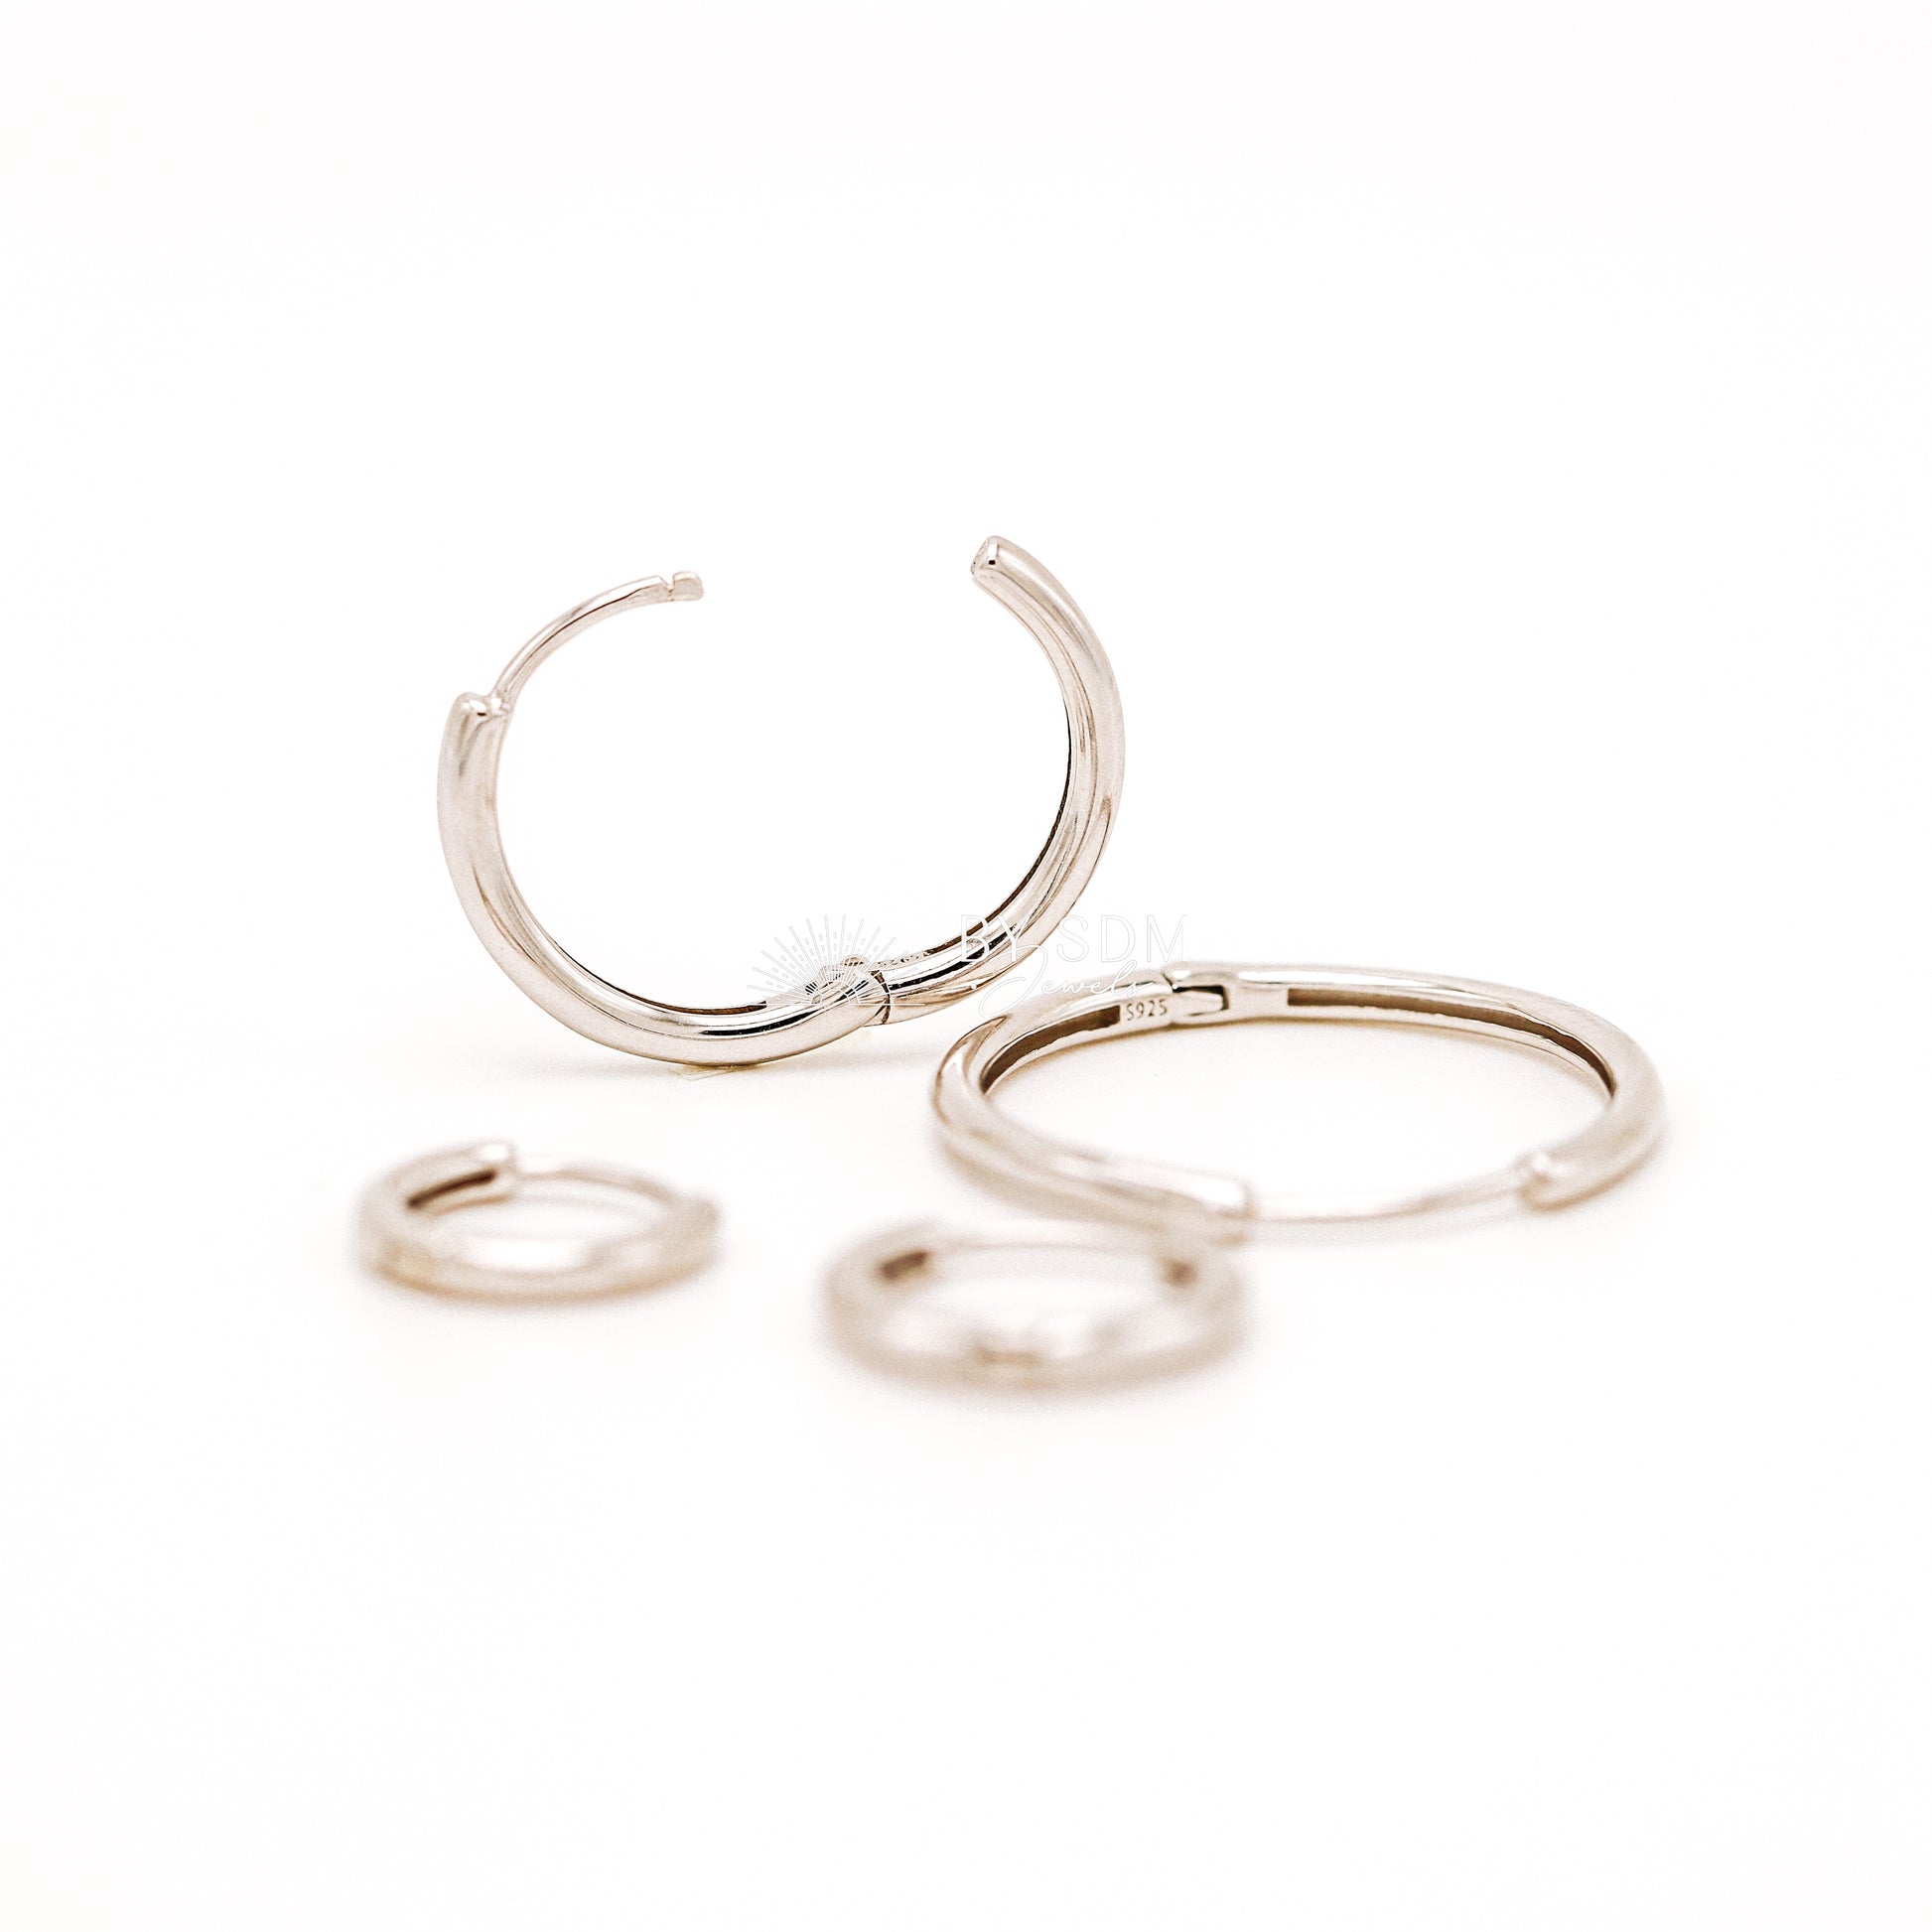 925 Sterling Silver Hoop Earrings Rounded Huggie Conch Cartilage Earrings Chunky Thick Hoop Earrings in Sizes 22 mm 18 mm 16 mm 11 mm 9 mm